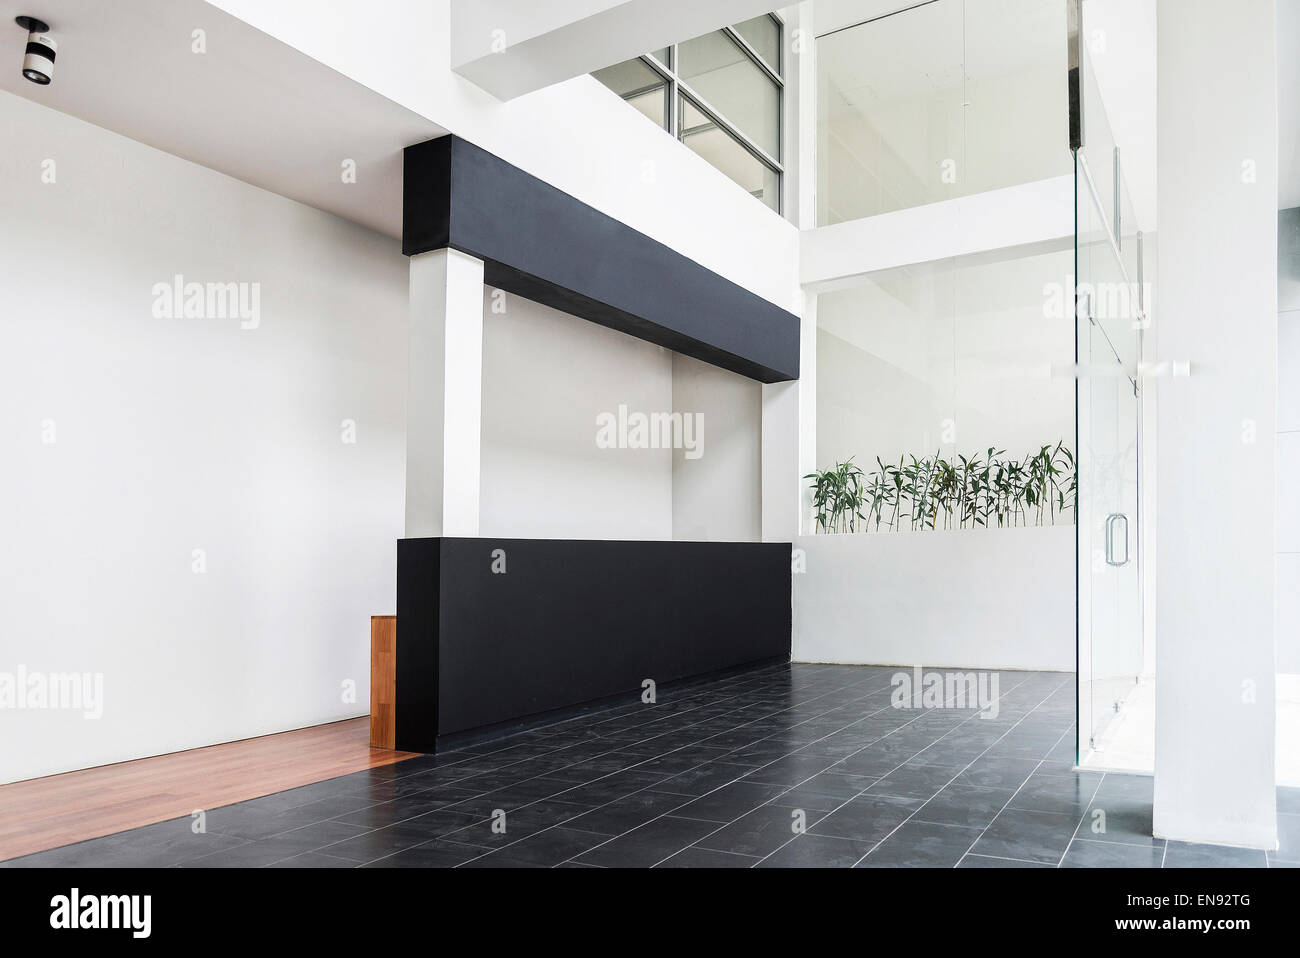 modern architecture with minimal style interior design Stock Photo